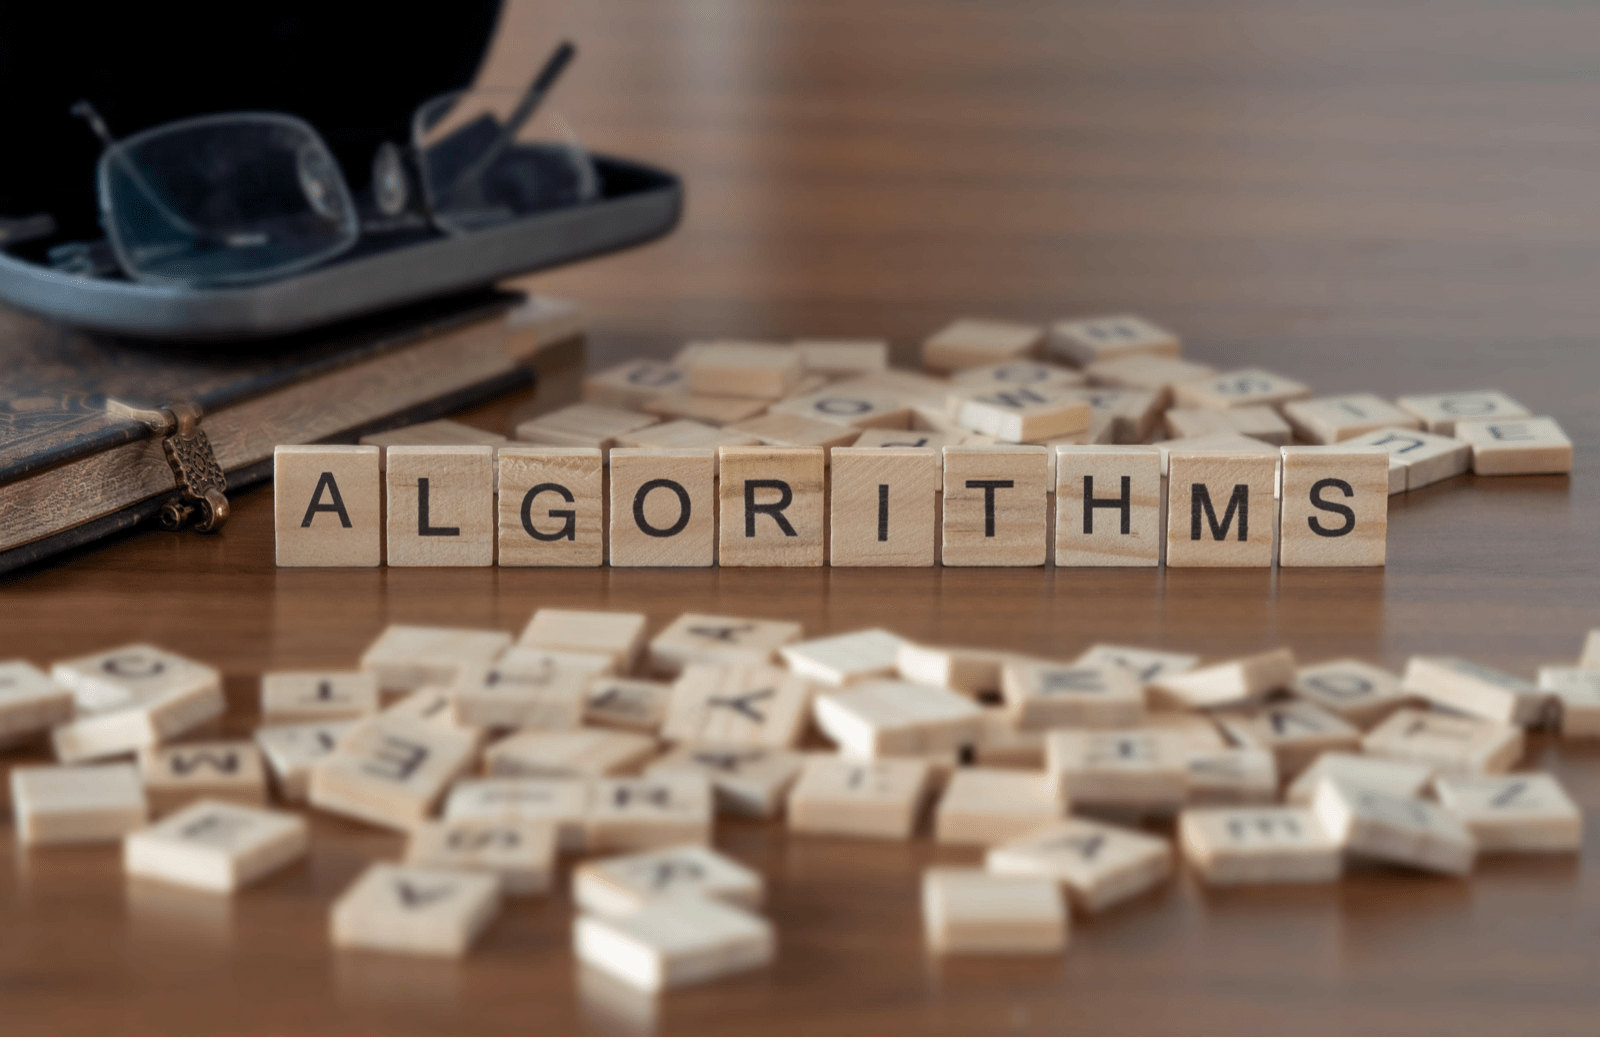 algorithmsと印字された木のブロック